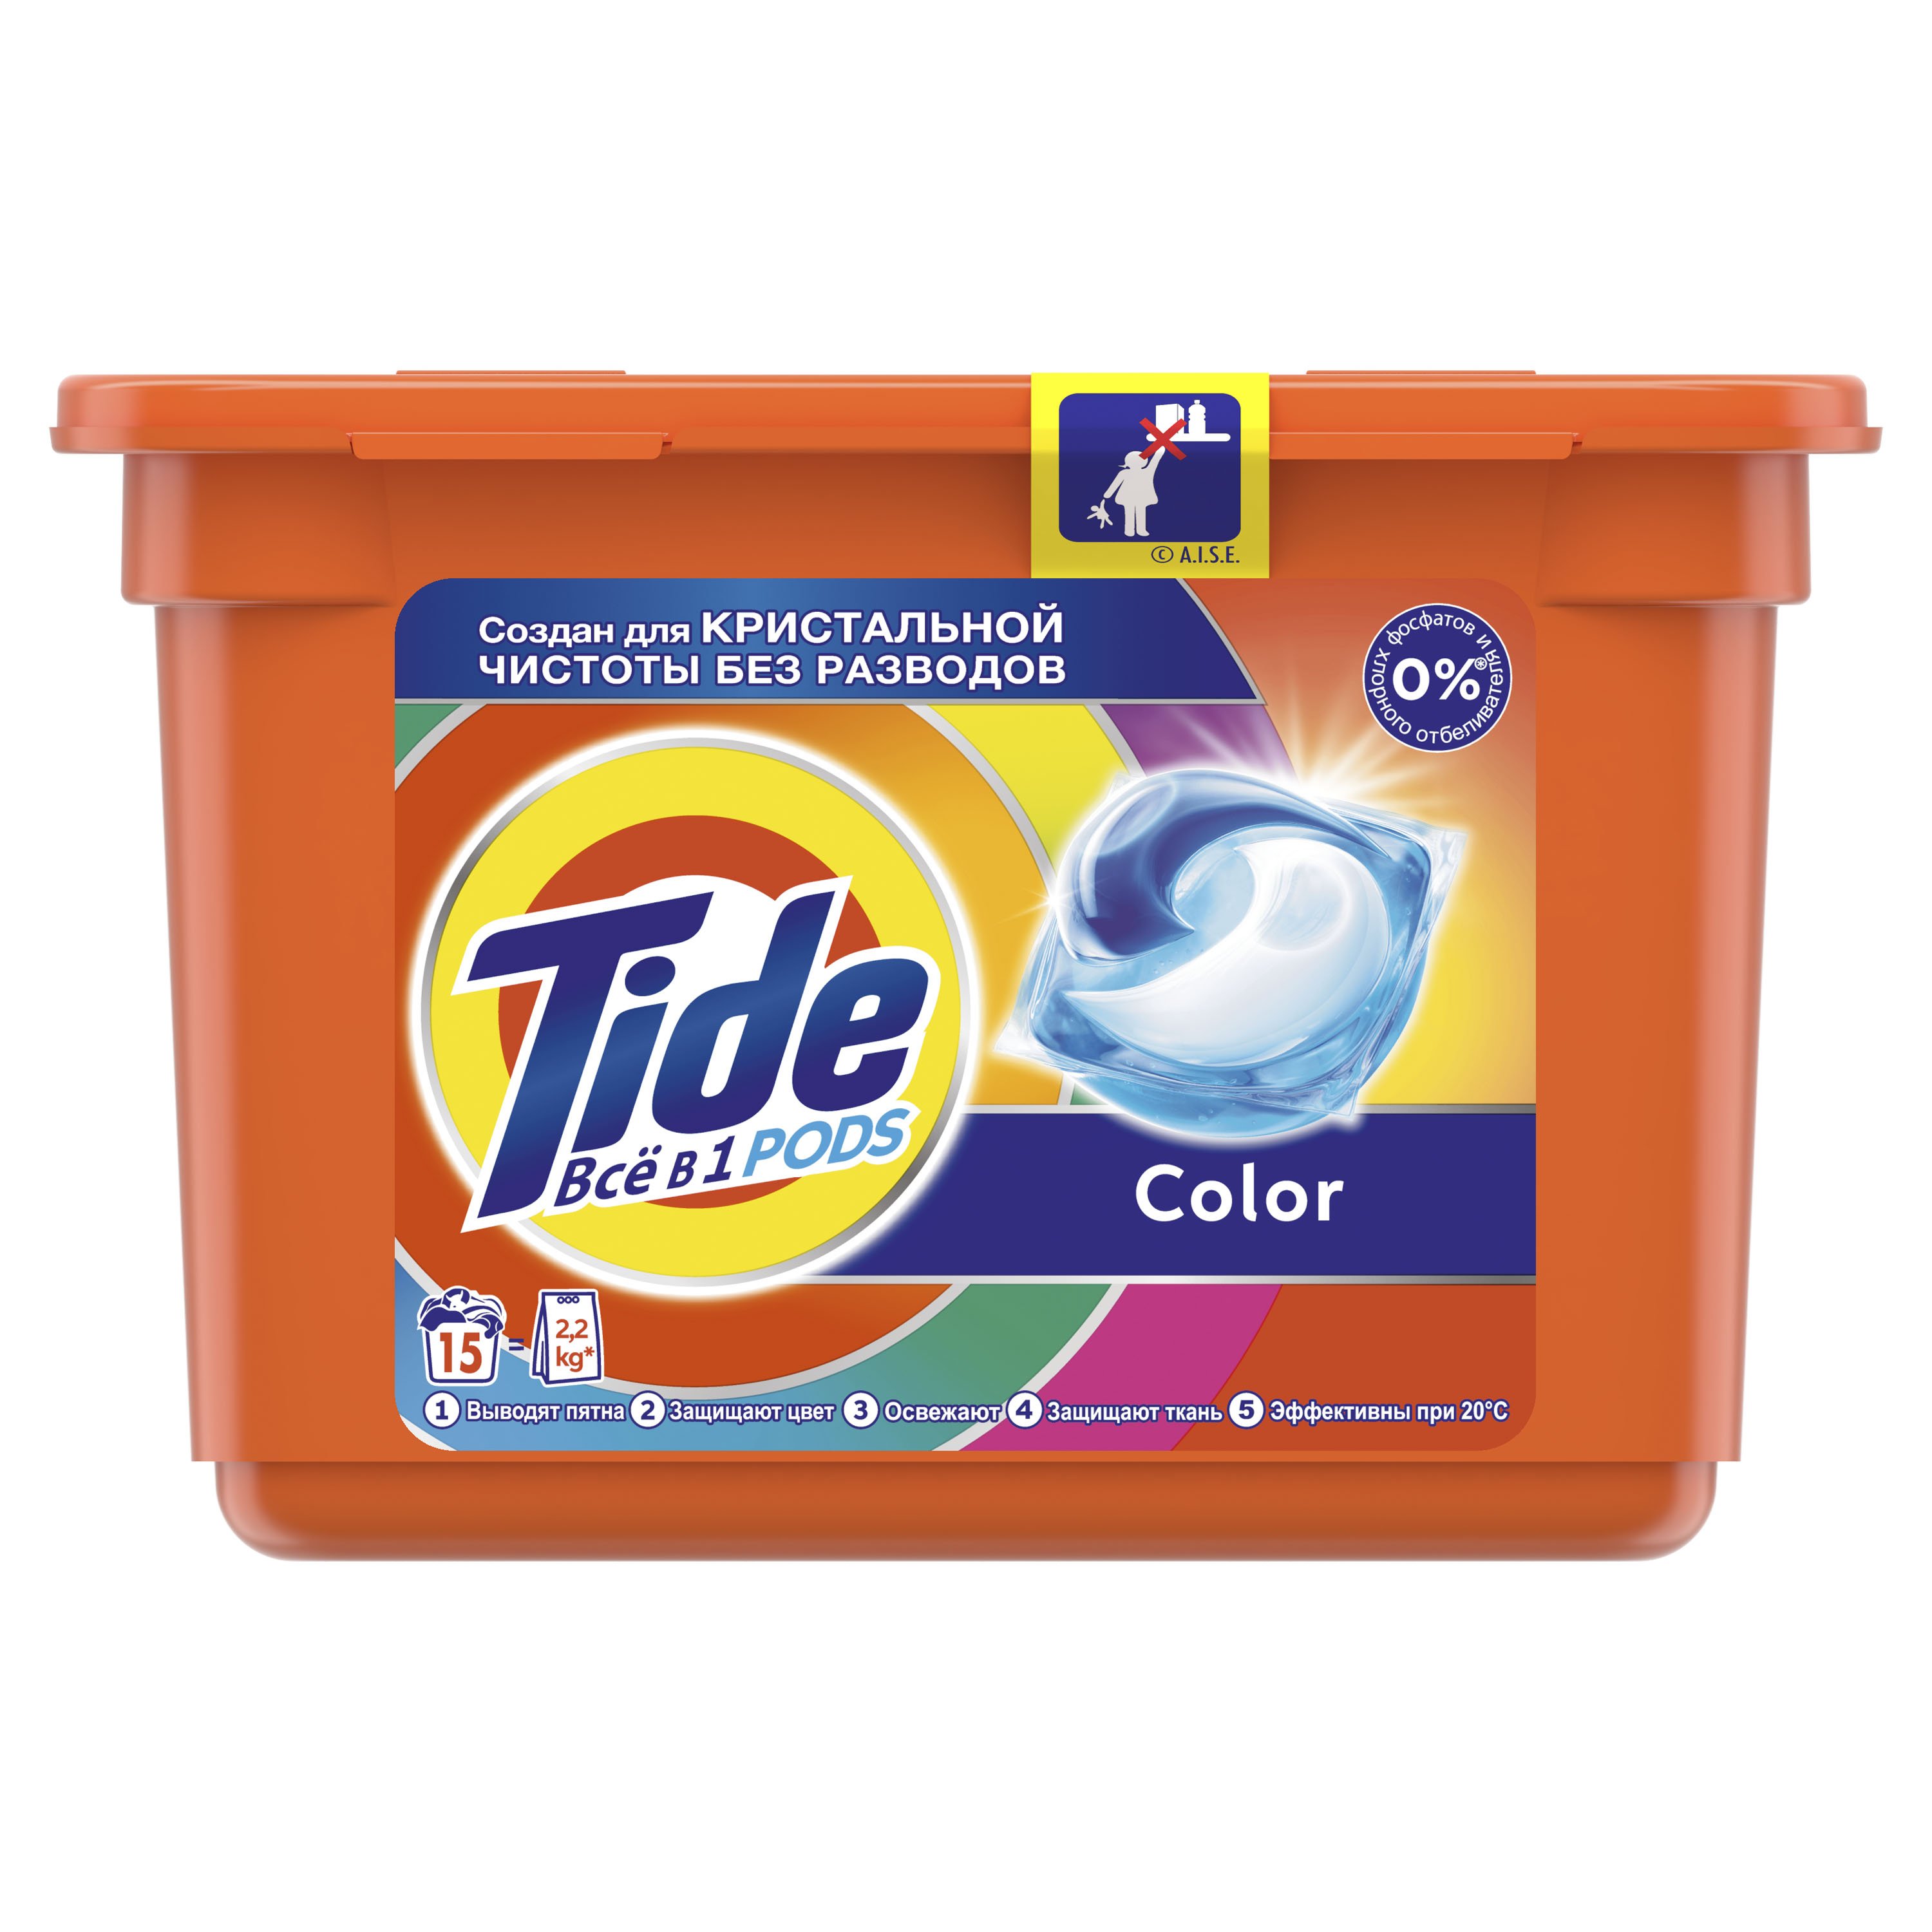 Капсули для прання Tide Все-в-1 Color, 15 шт. - фото 1